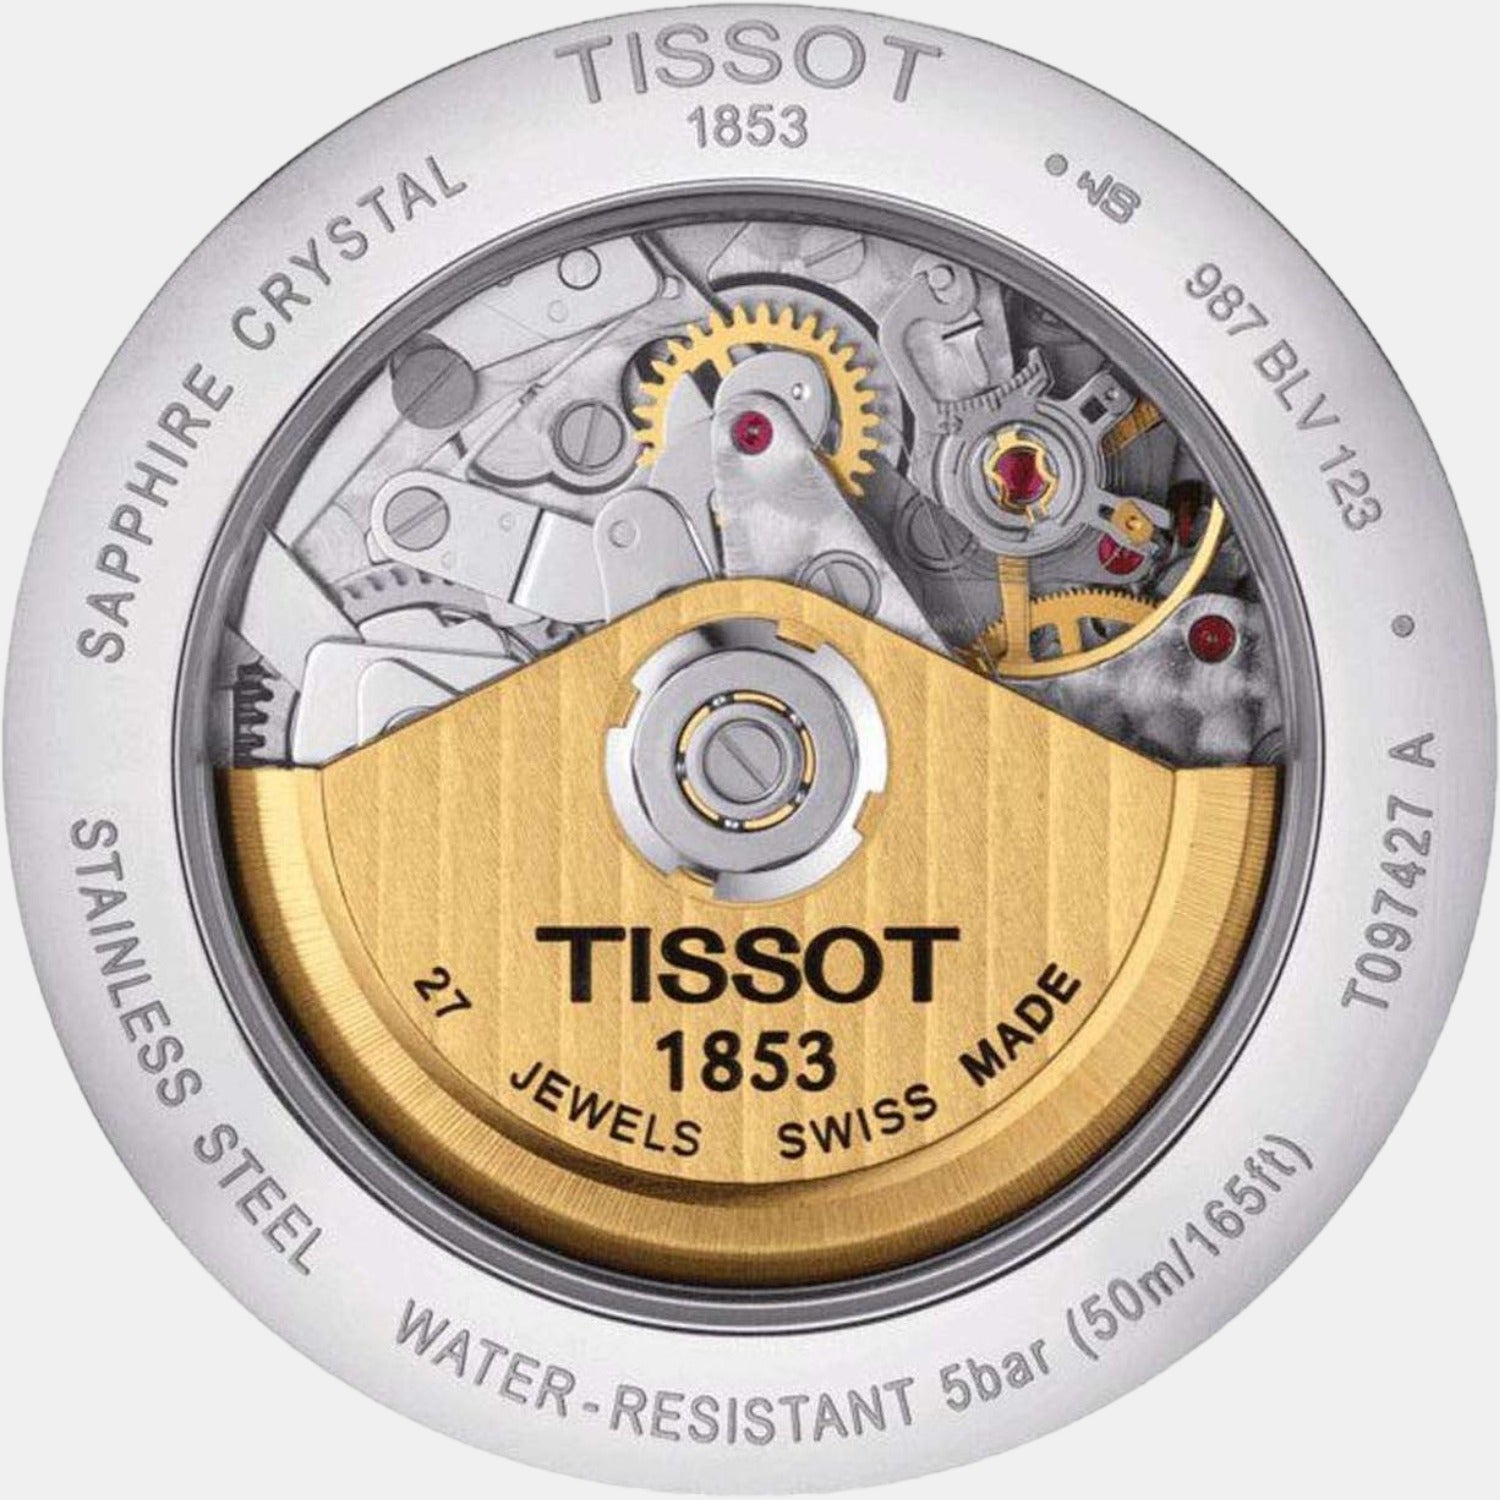 tissot-stainless-steel-silver-analog-men-watch-t0974272203300